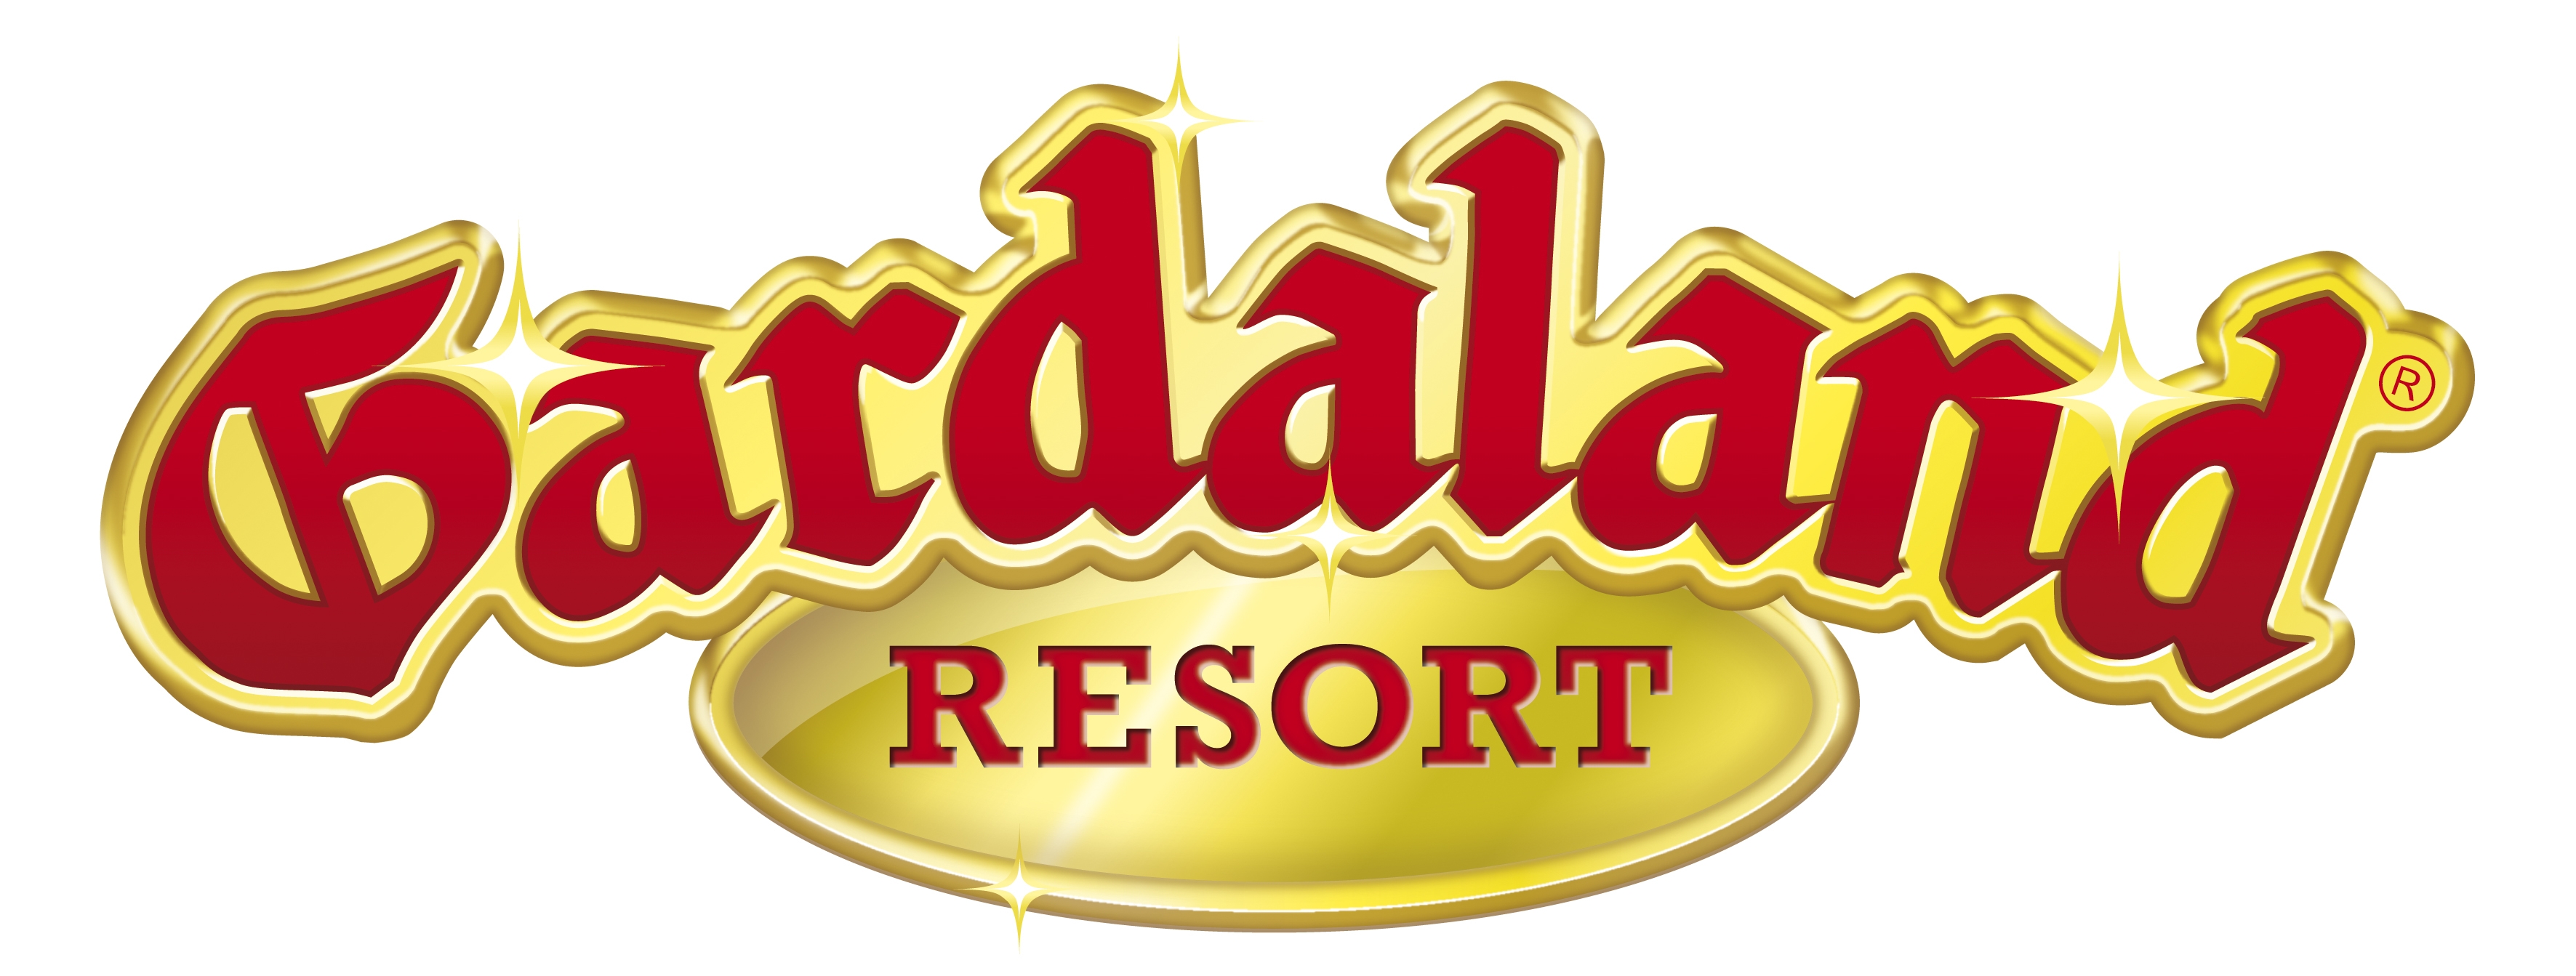 Gardaland | Parkz - Theme Parks